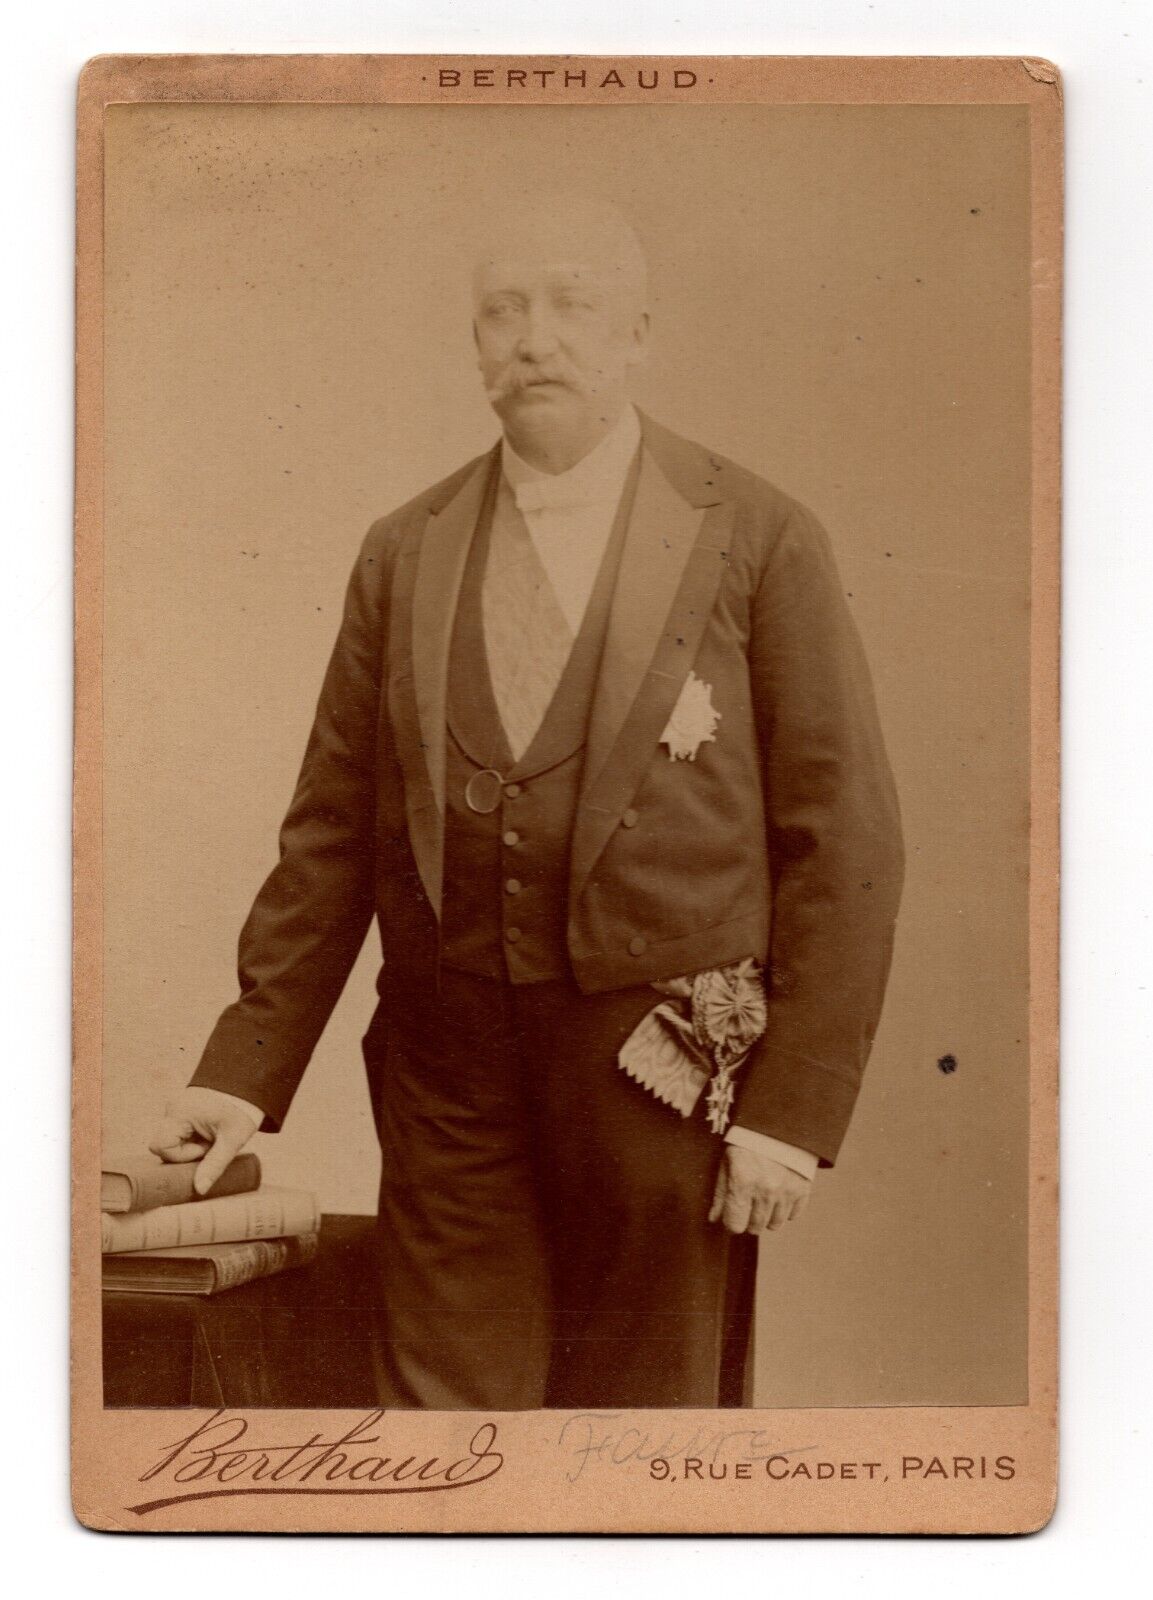 CIRCA 1880s CABINET CARD BERTHAUD FELIX FAURE PRESIDENT OF FRANCE PARIS